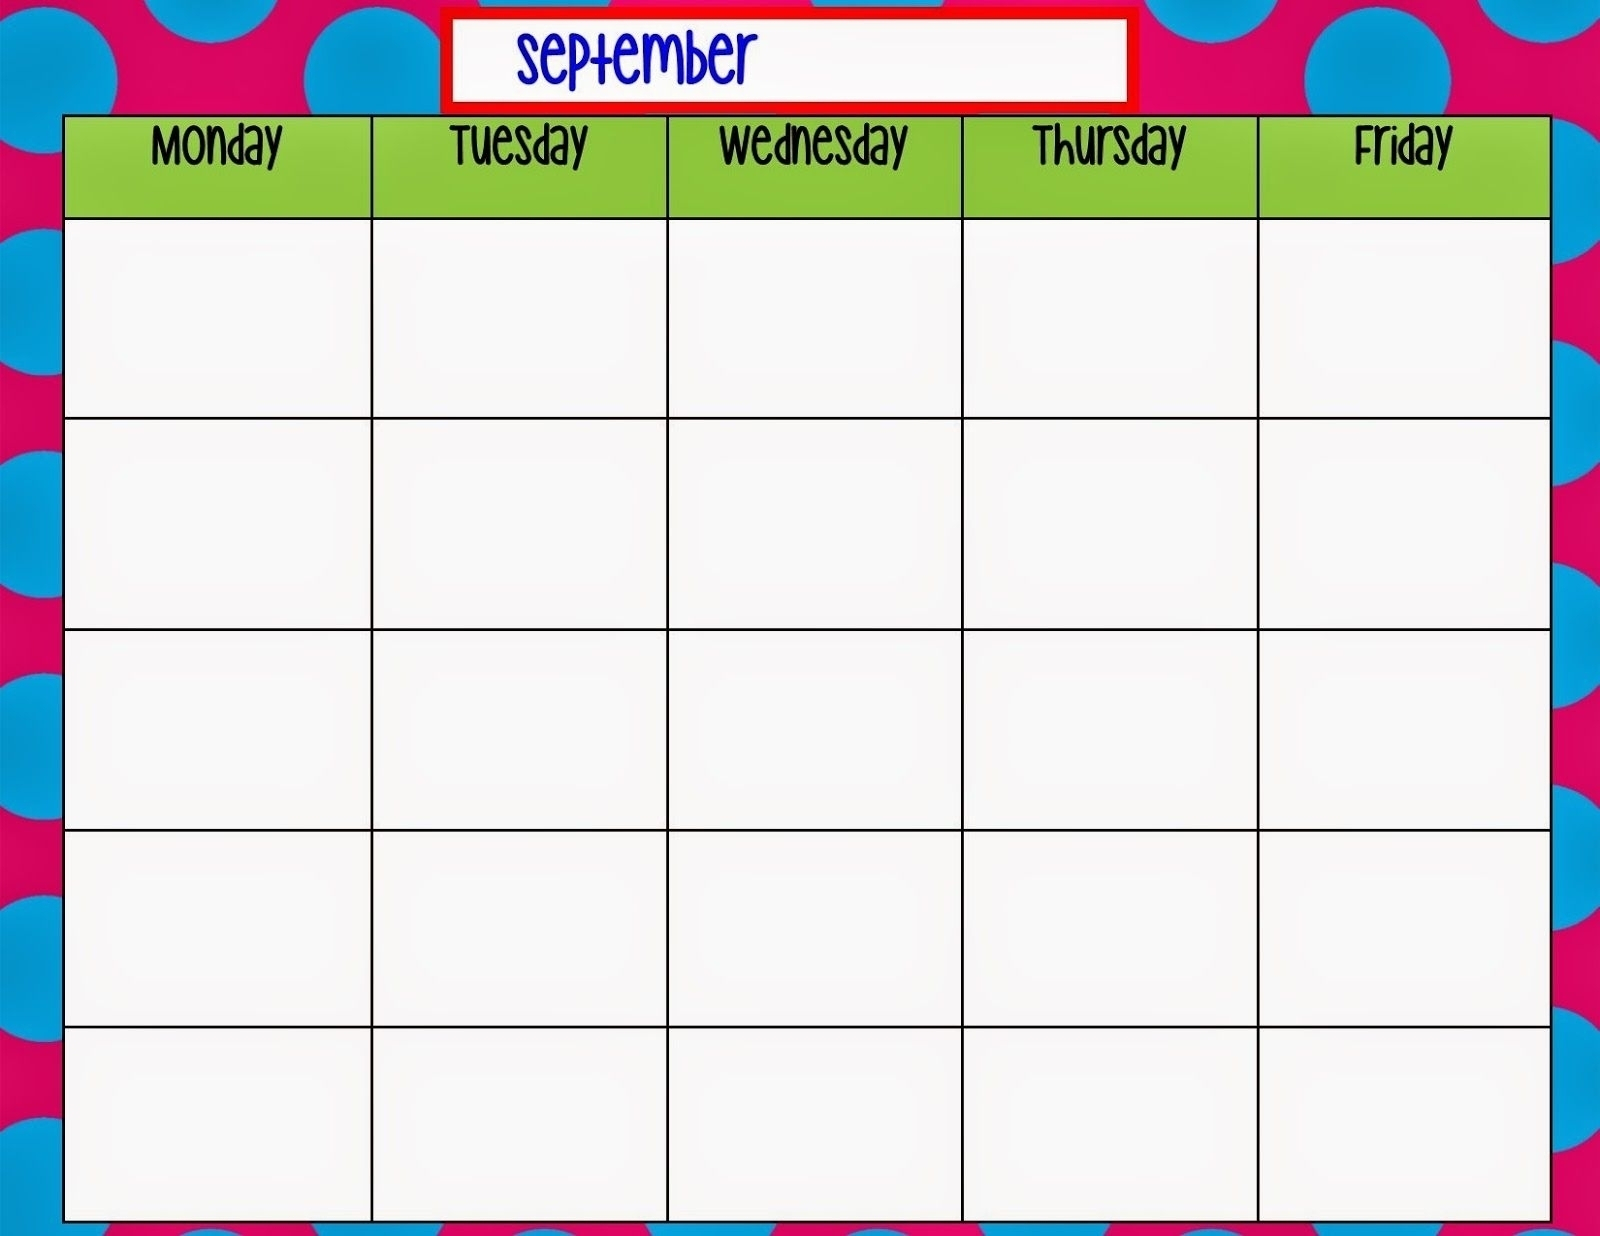 Excel 201 Calendar Monday To Friday | Ten Free Printable Calendar 20212022 intended for Blank Calendar Printable Monday To Friday